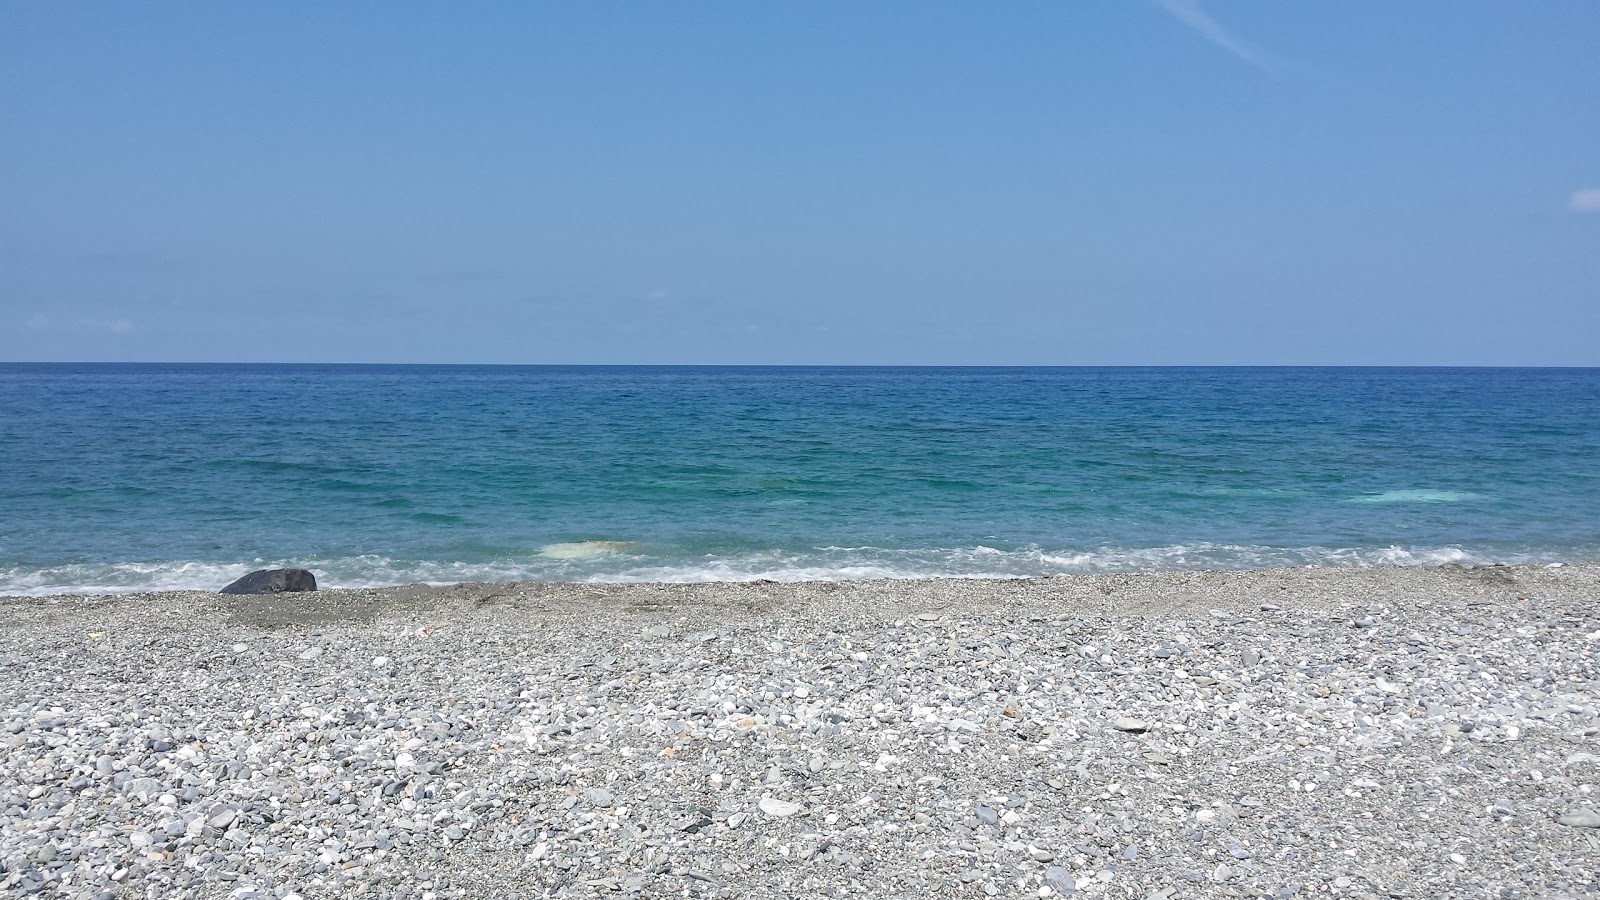 Foto av Spiaggia Amantea omgiven av klippor